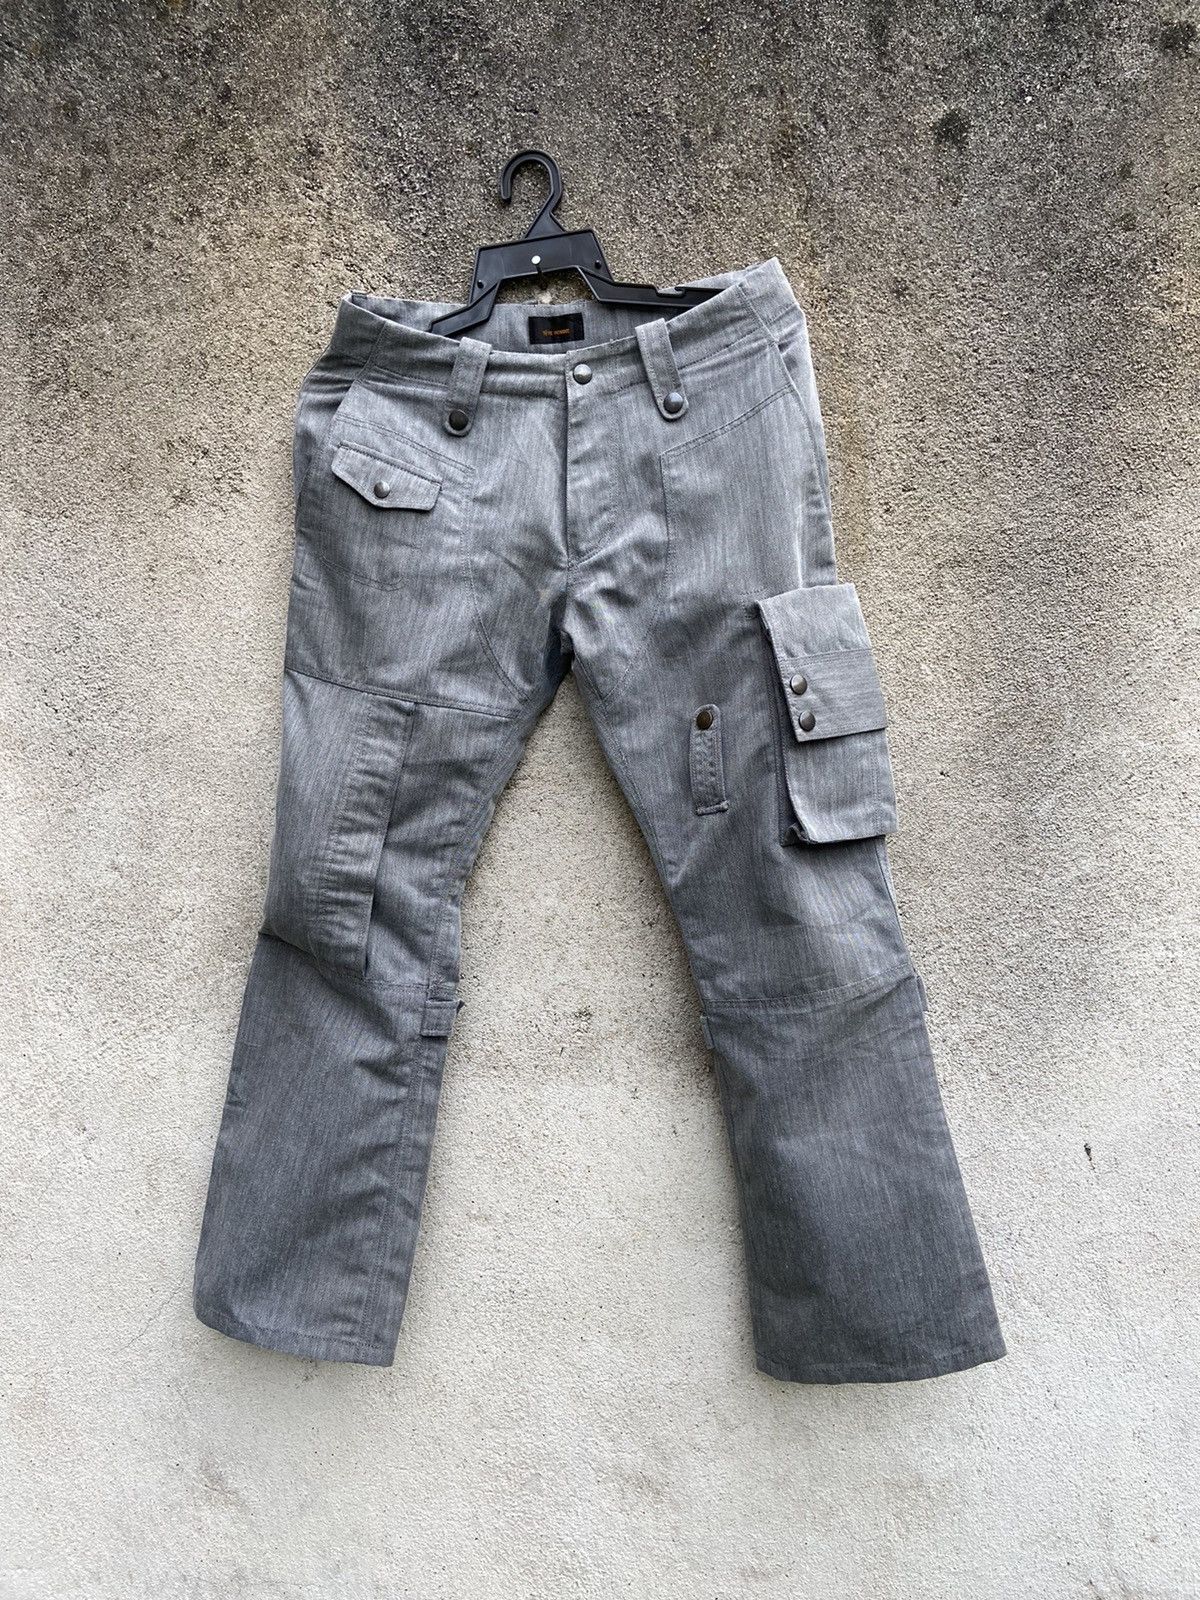 Issey Miyake Tete Homme By Issey Miyake Multi Pocket Cargo Pants | Grailed